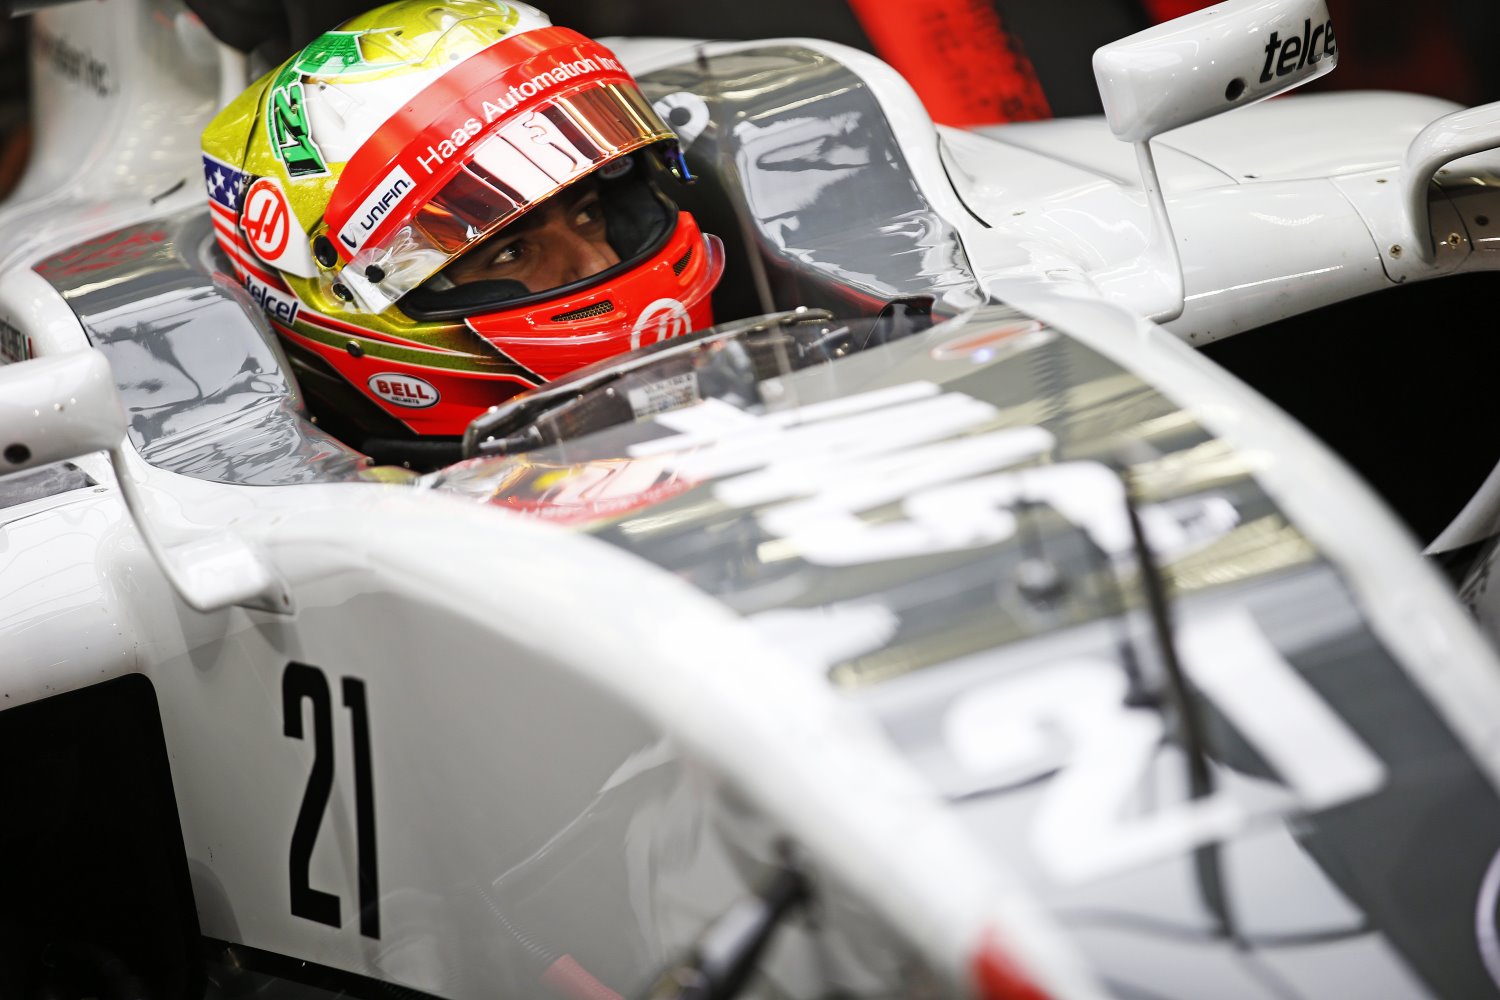 Haas F1 driver Esteban Gutierez